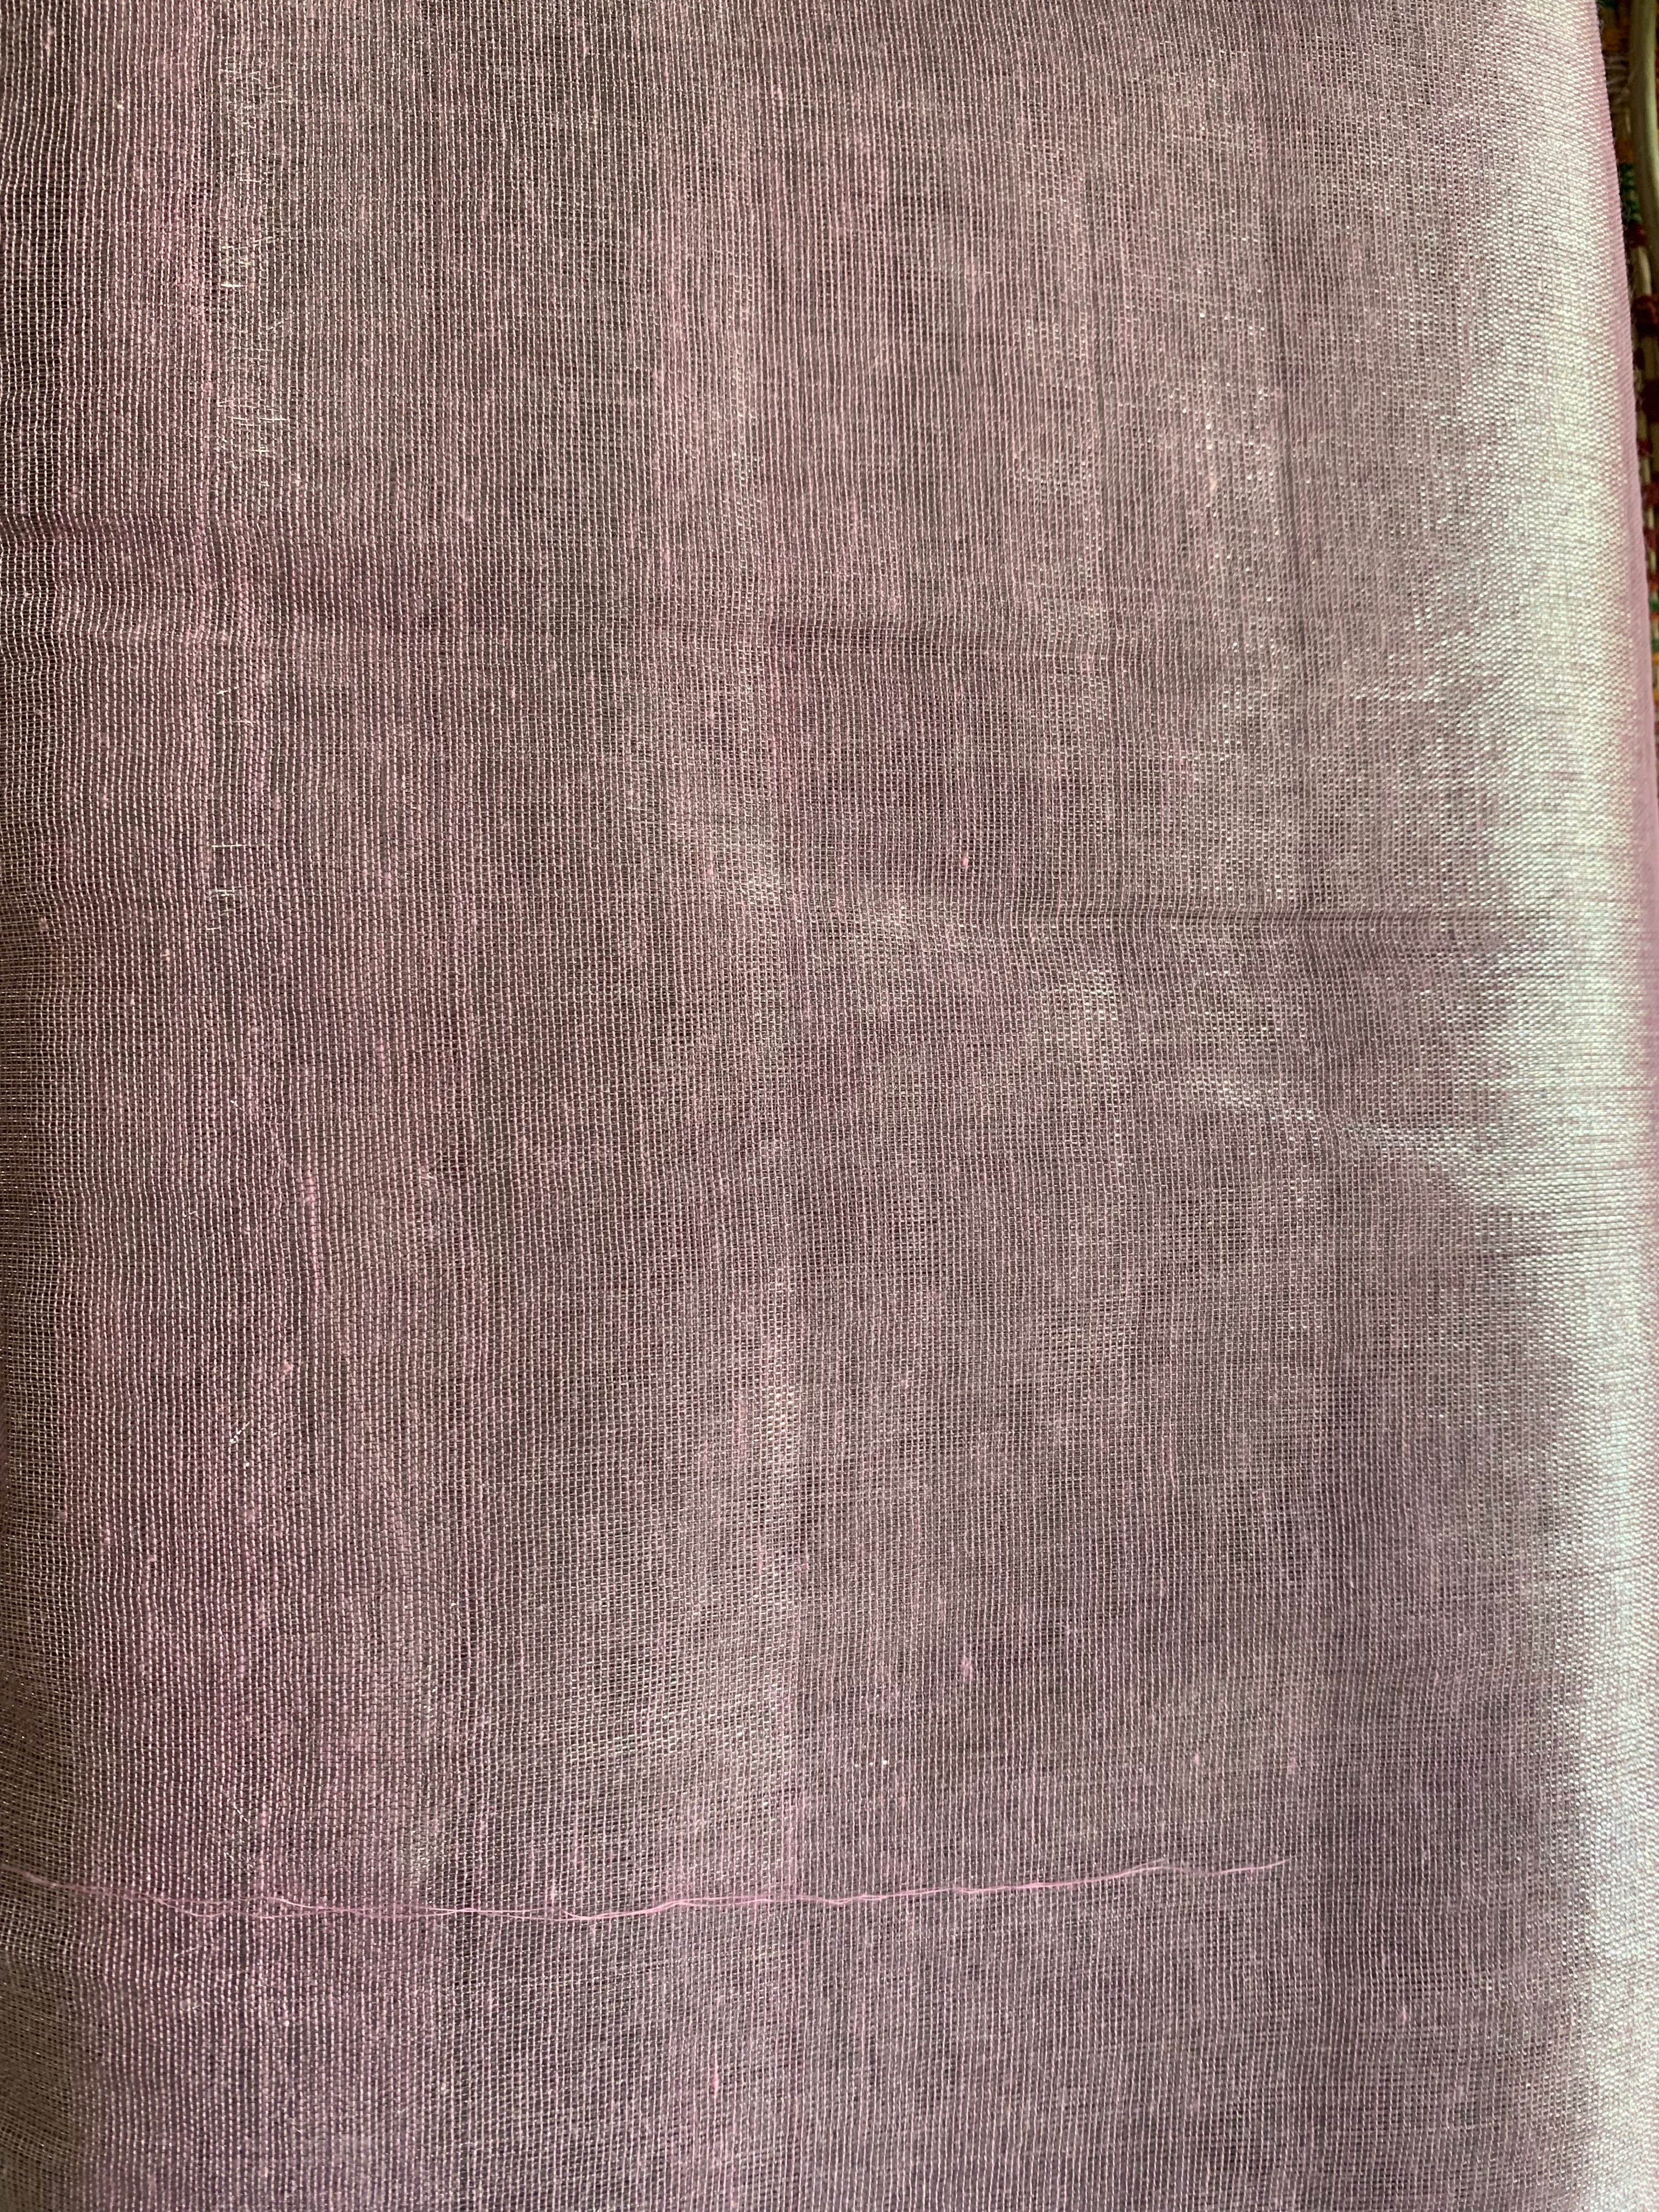 Blush pink handloom fabric